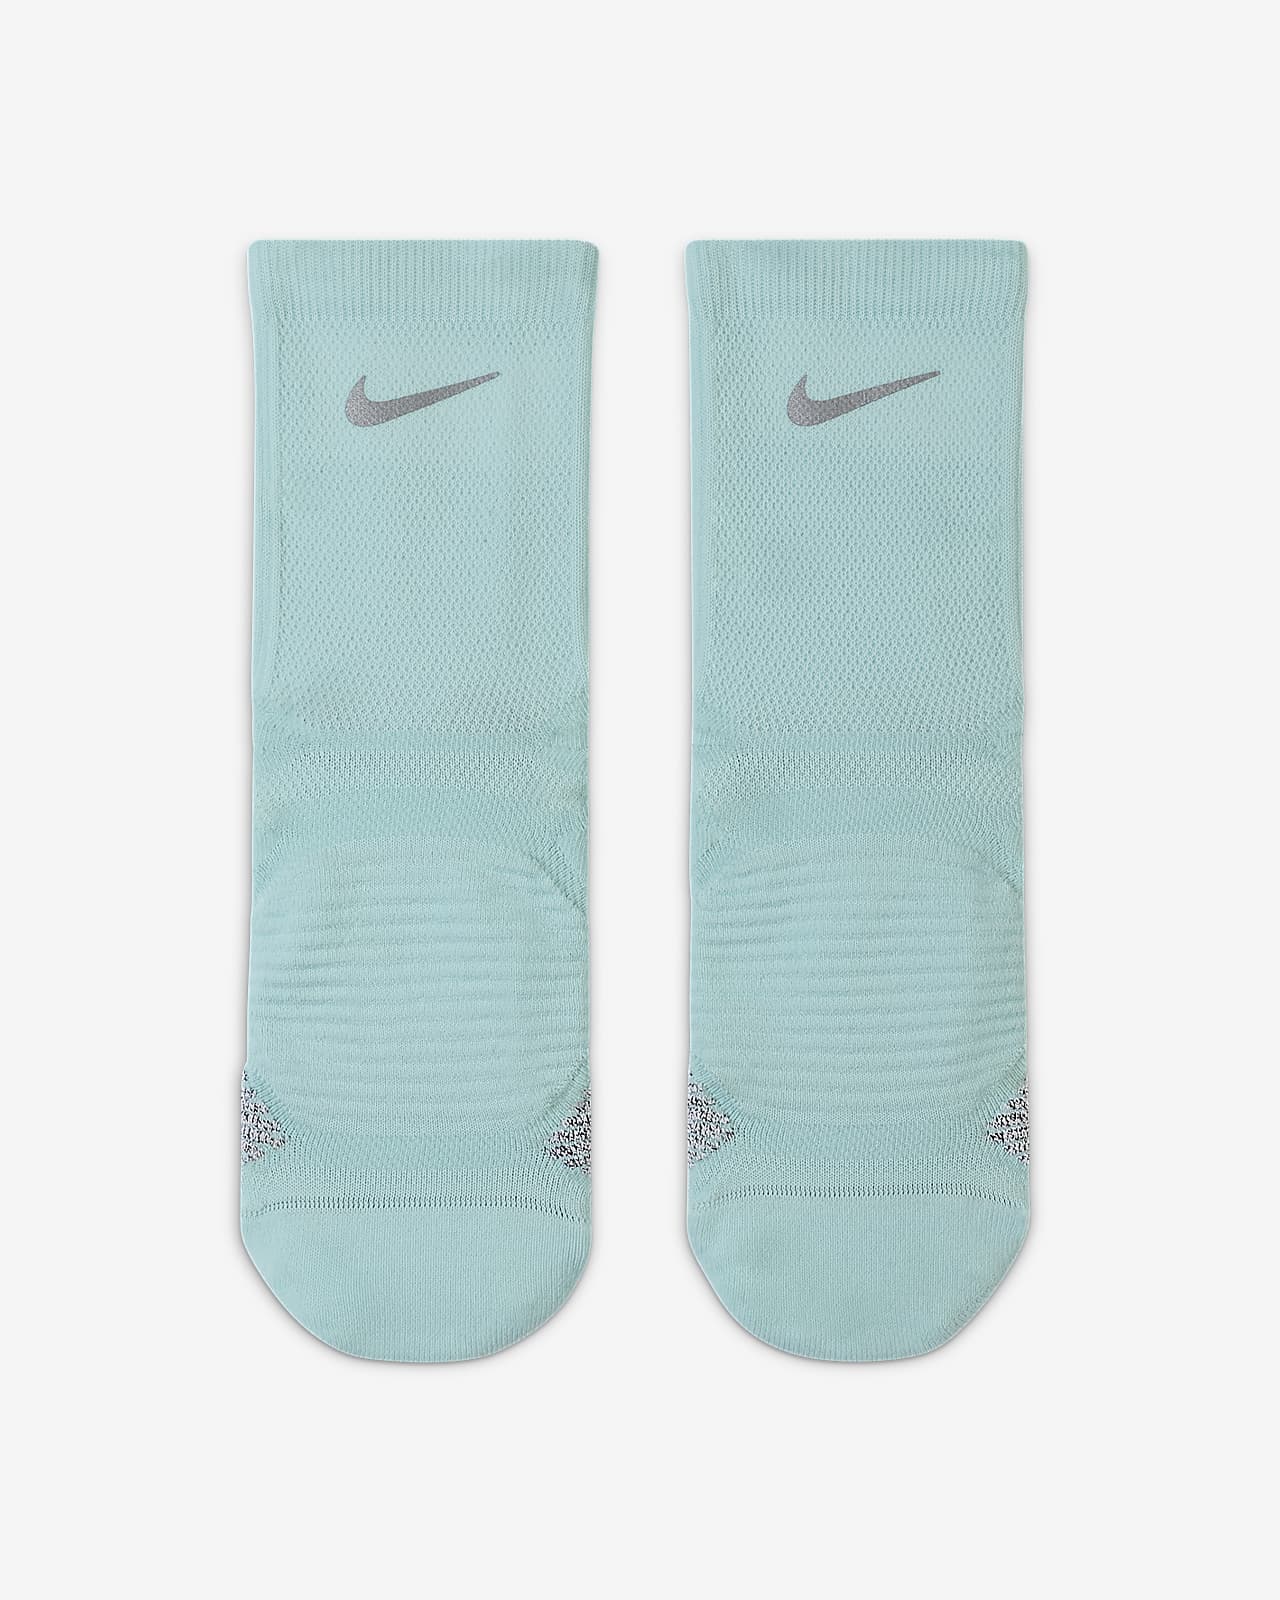 Nike Racing Ankle Socks. Nike NZ